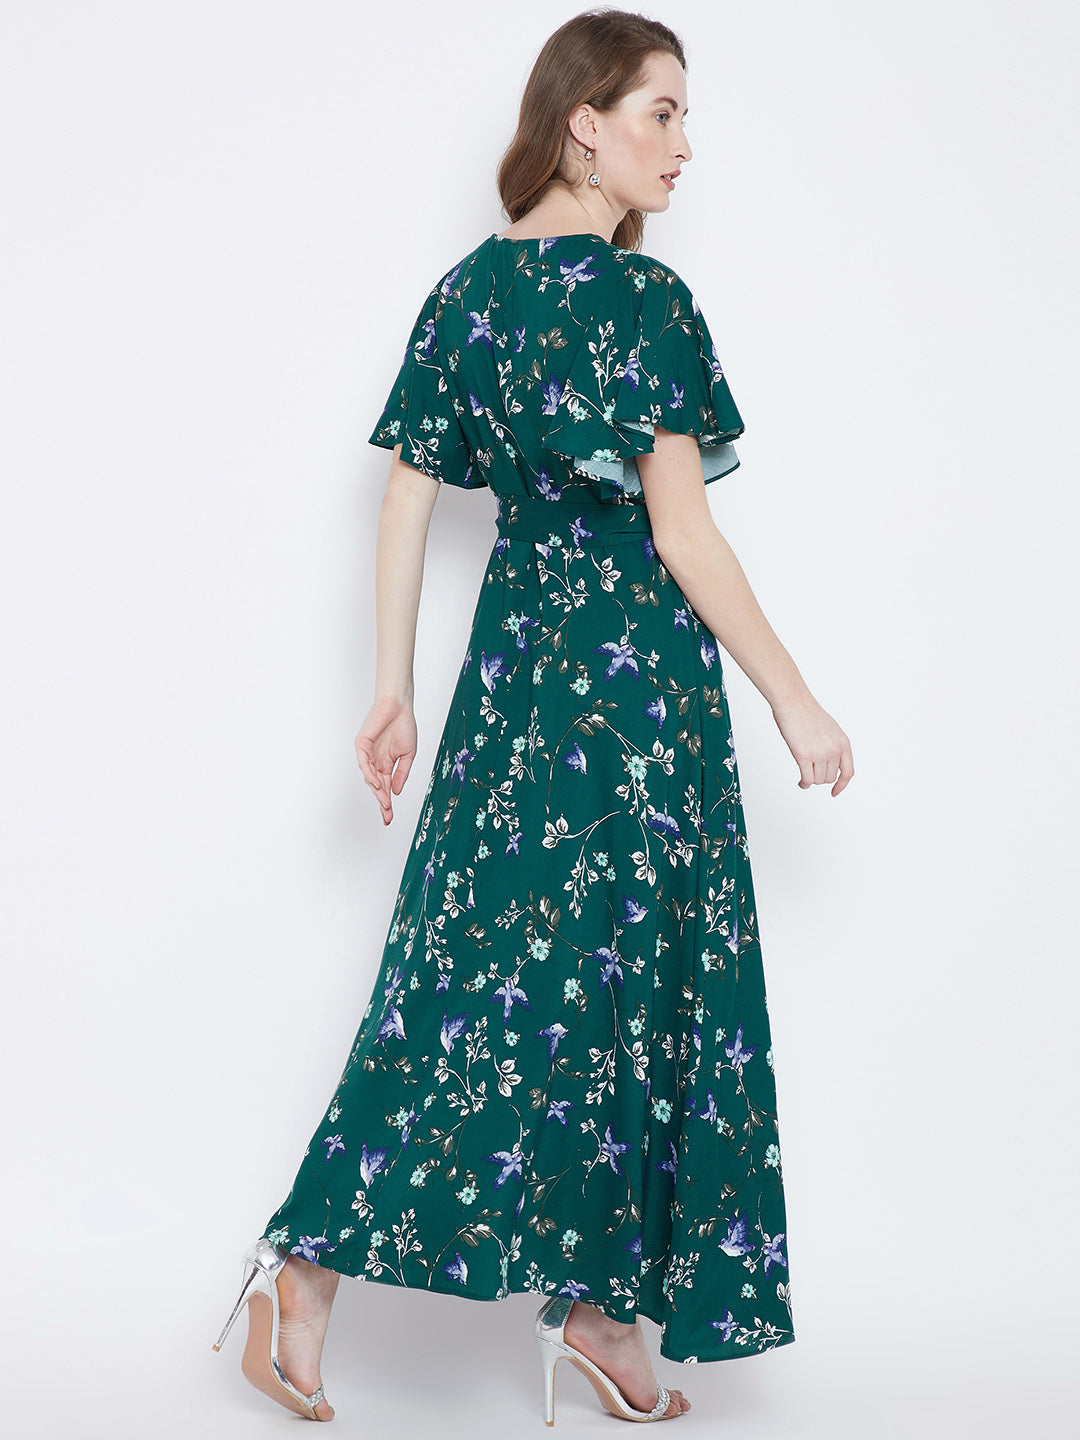 Berrylush Green Printed Maxi Dress - Berrylush